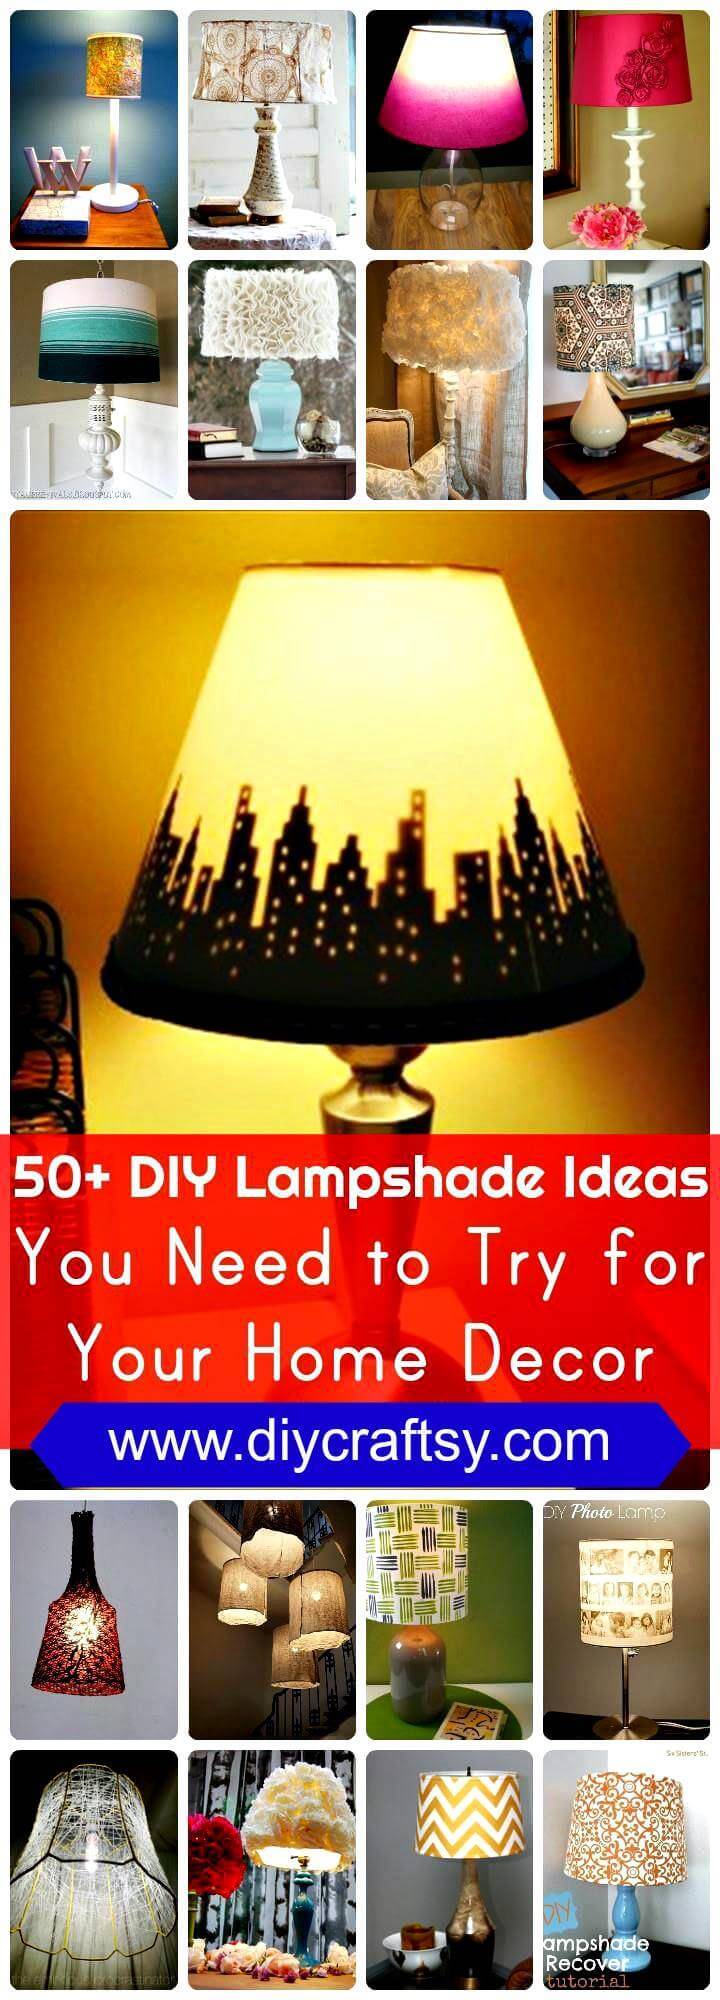 DIY Lampshade Ideas